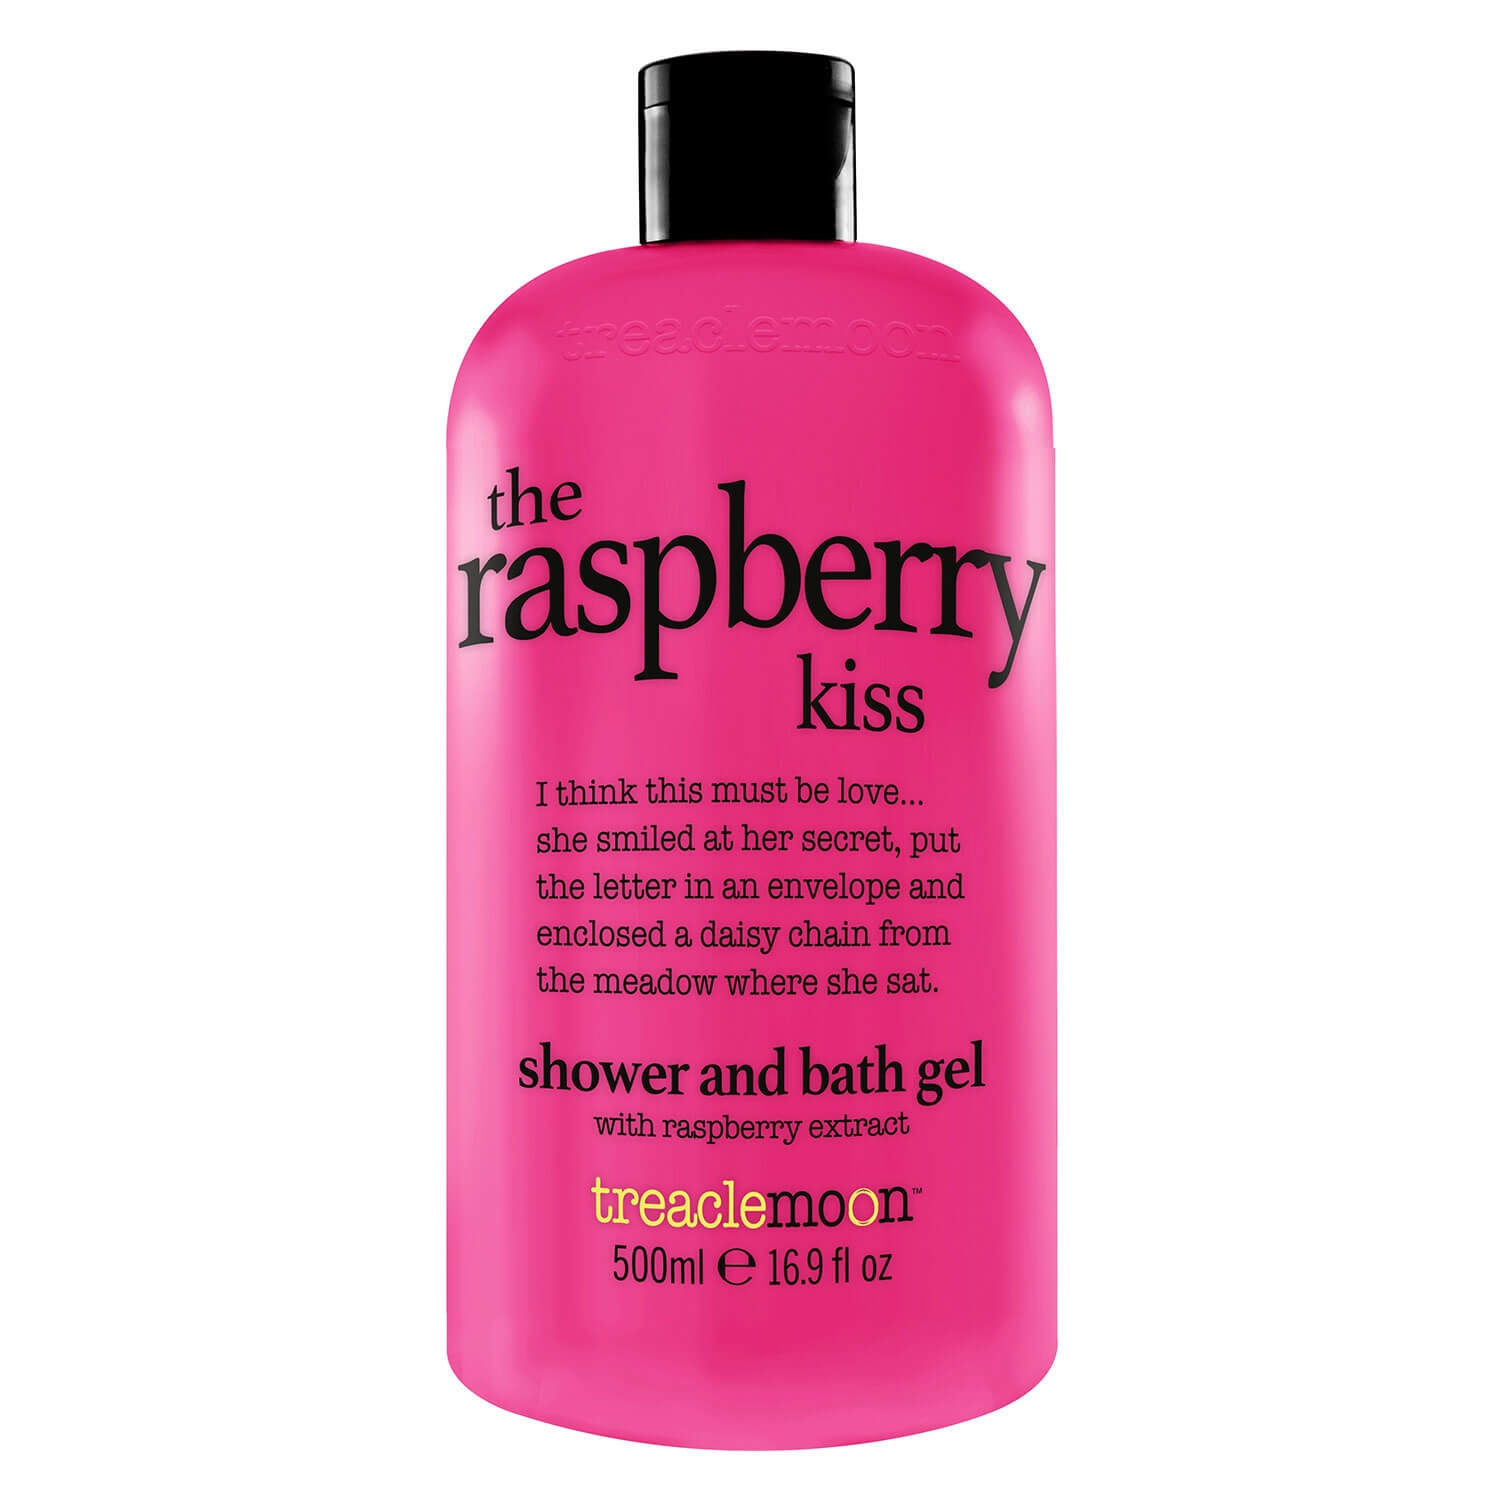 Produktbild von treaclemoon - the raspberry kiss bath and shower gel